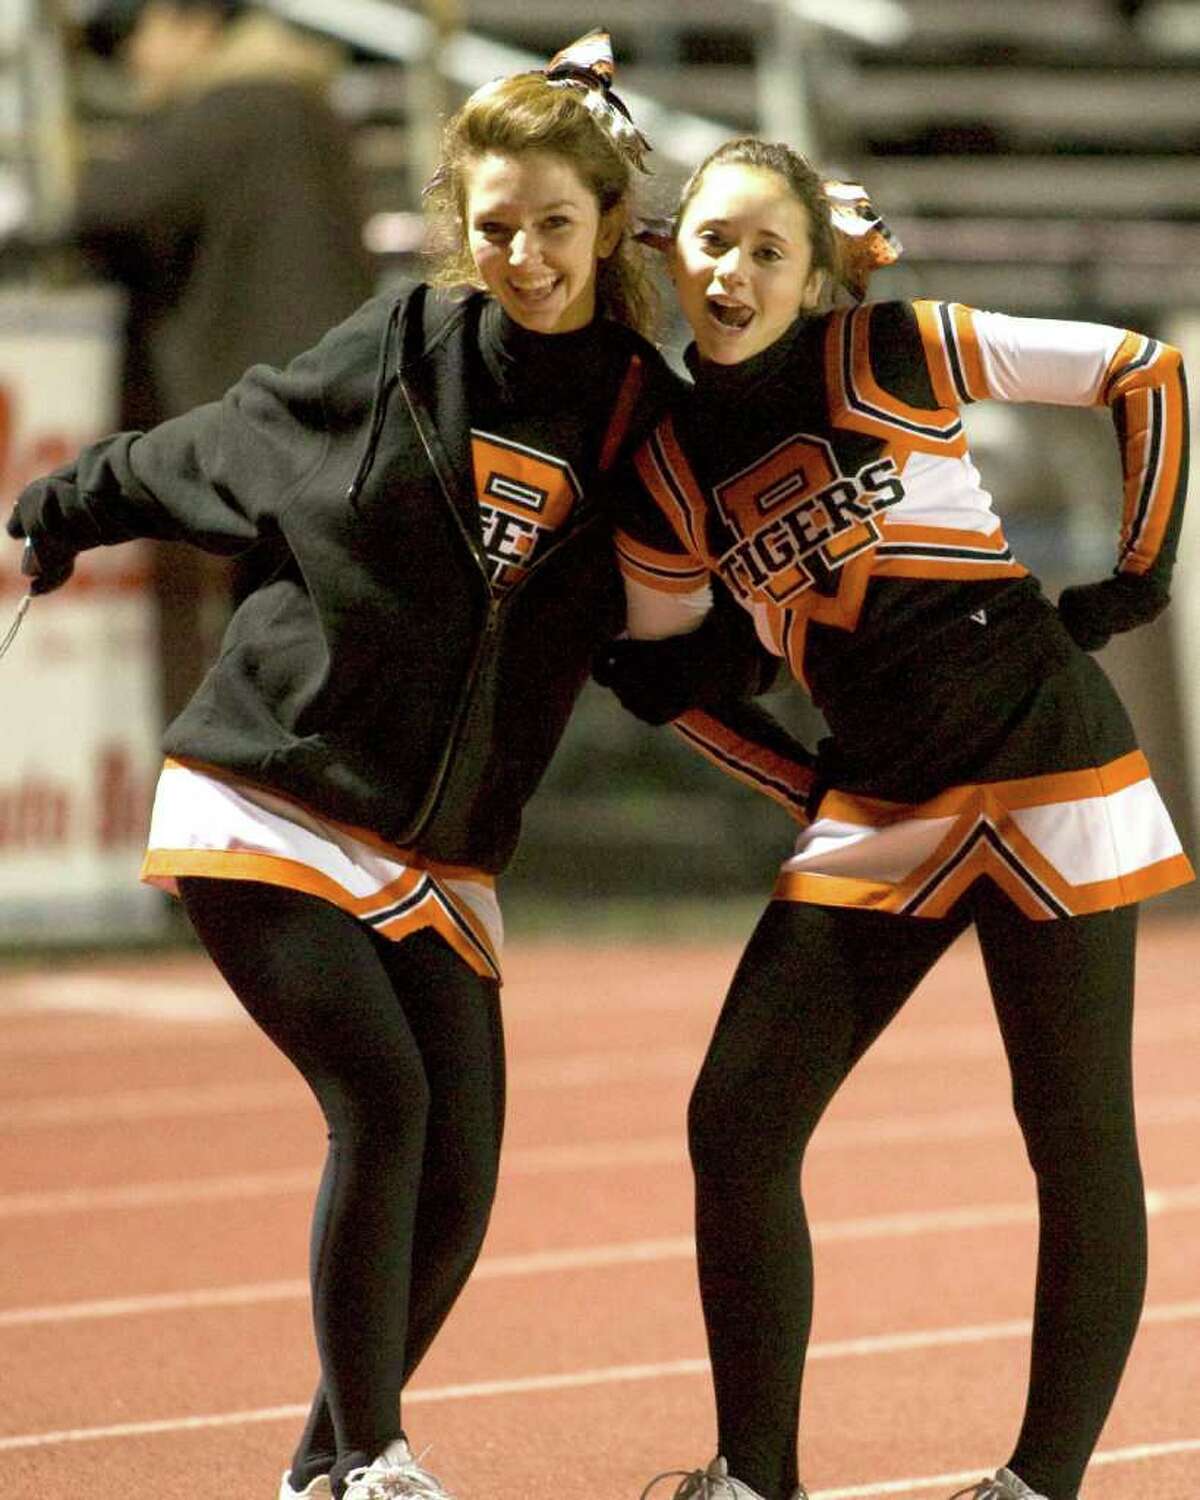 Two Ridgefield cheerleaders pose before the Tigers' football game against Trumbull Friday night, Nov. 5, 2010, at Ridgefield High School.